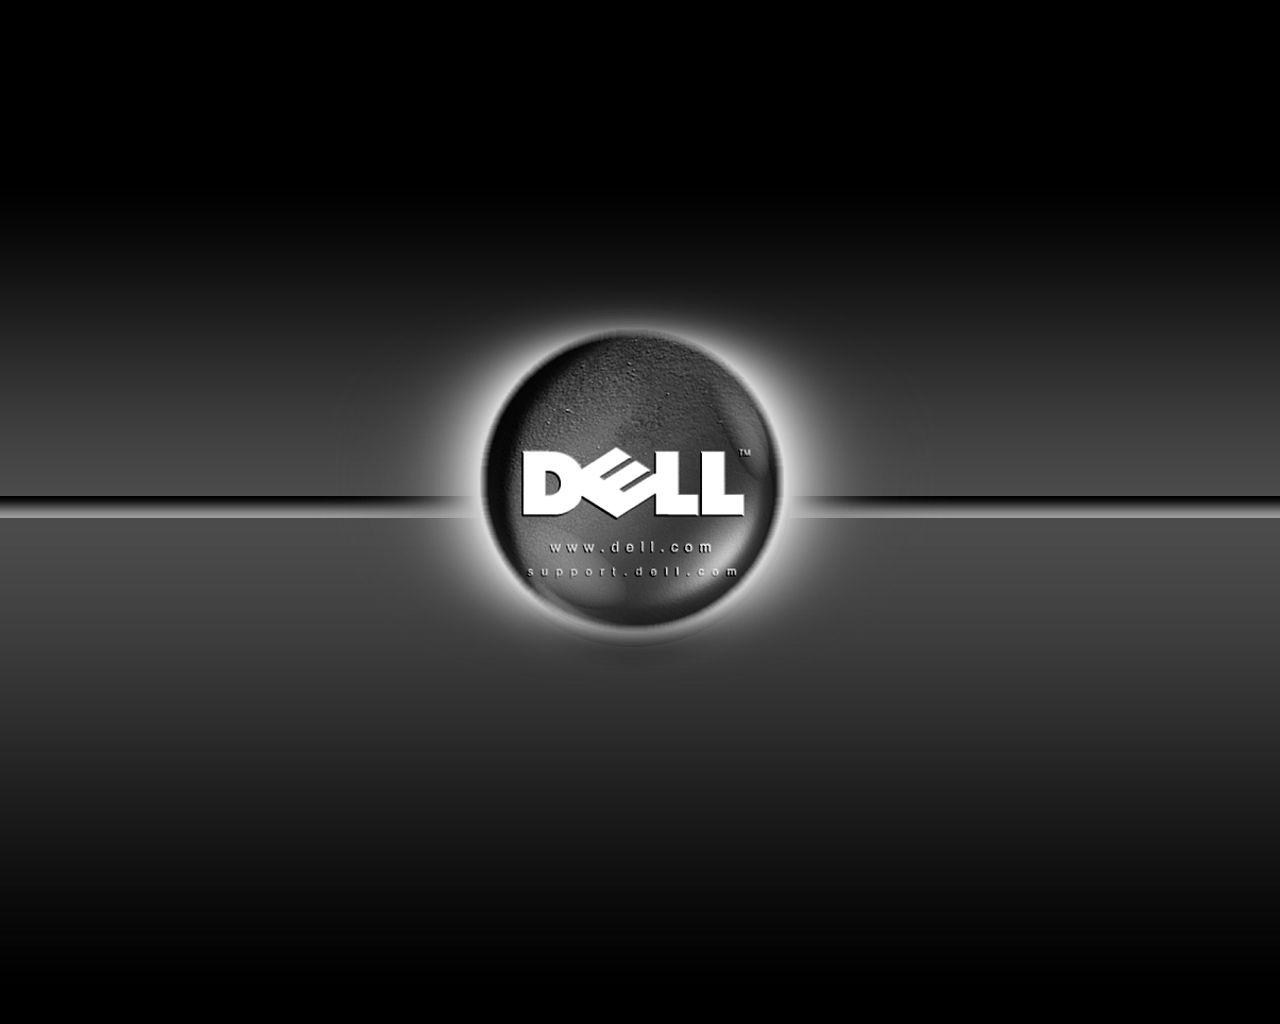 Dell Desktop Background Wallpaper In Logos